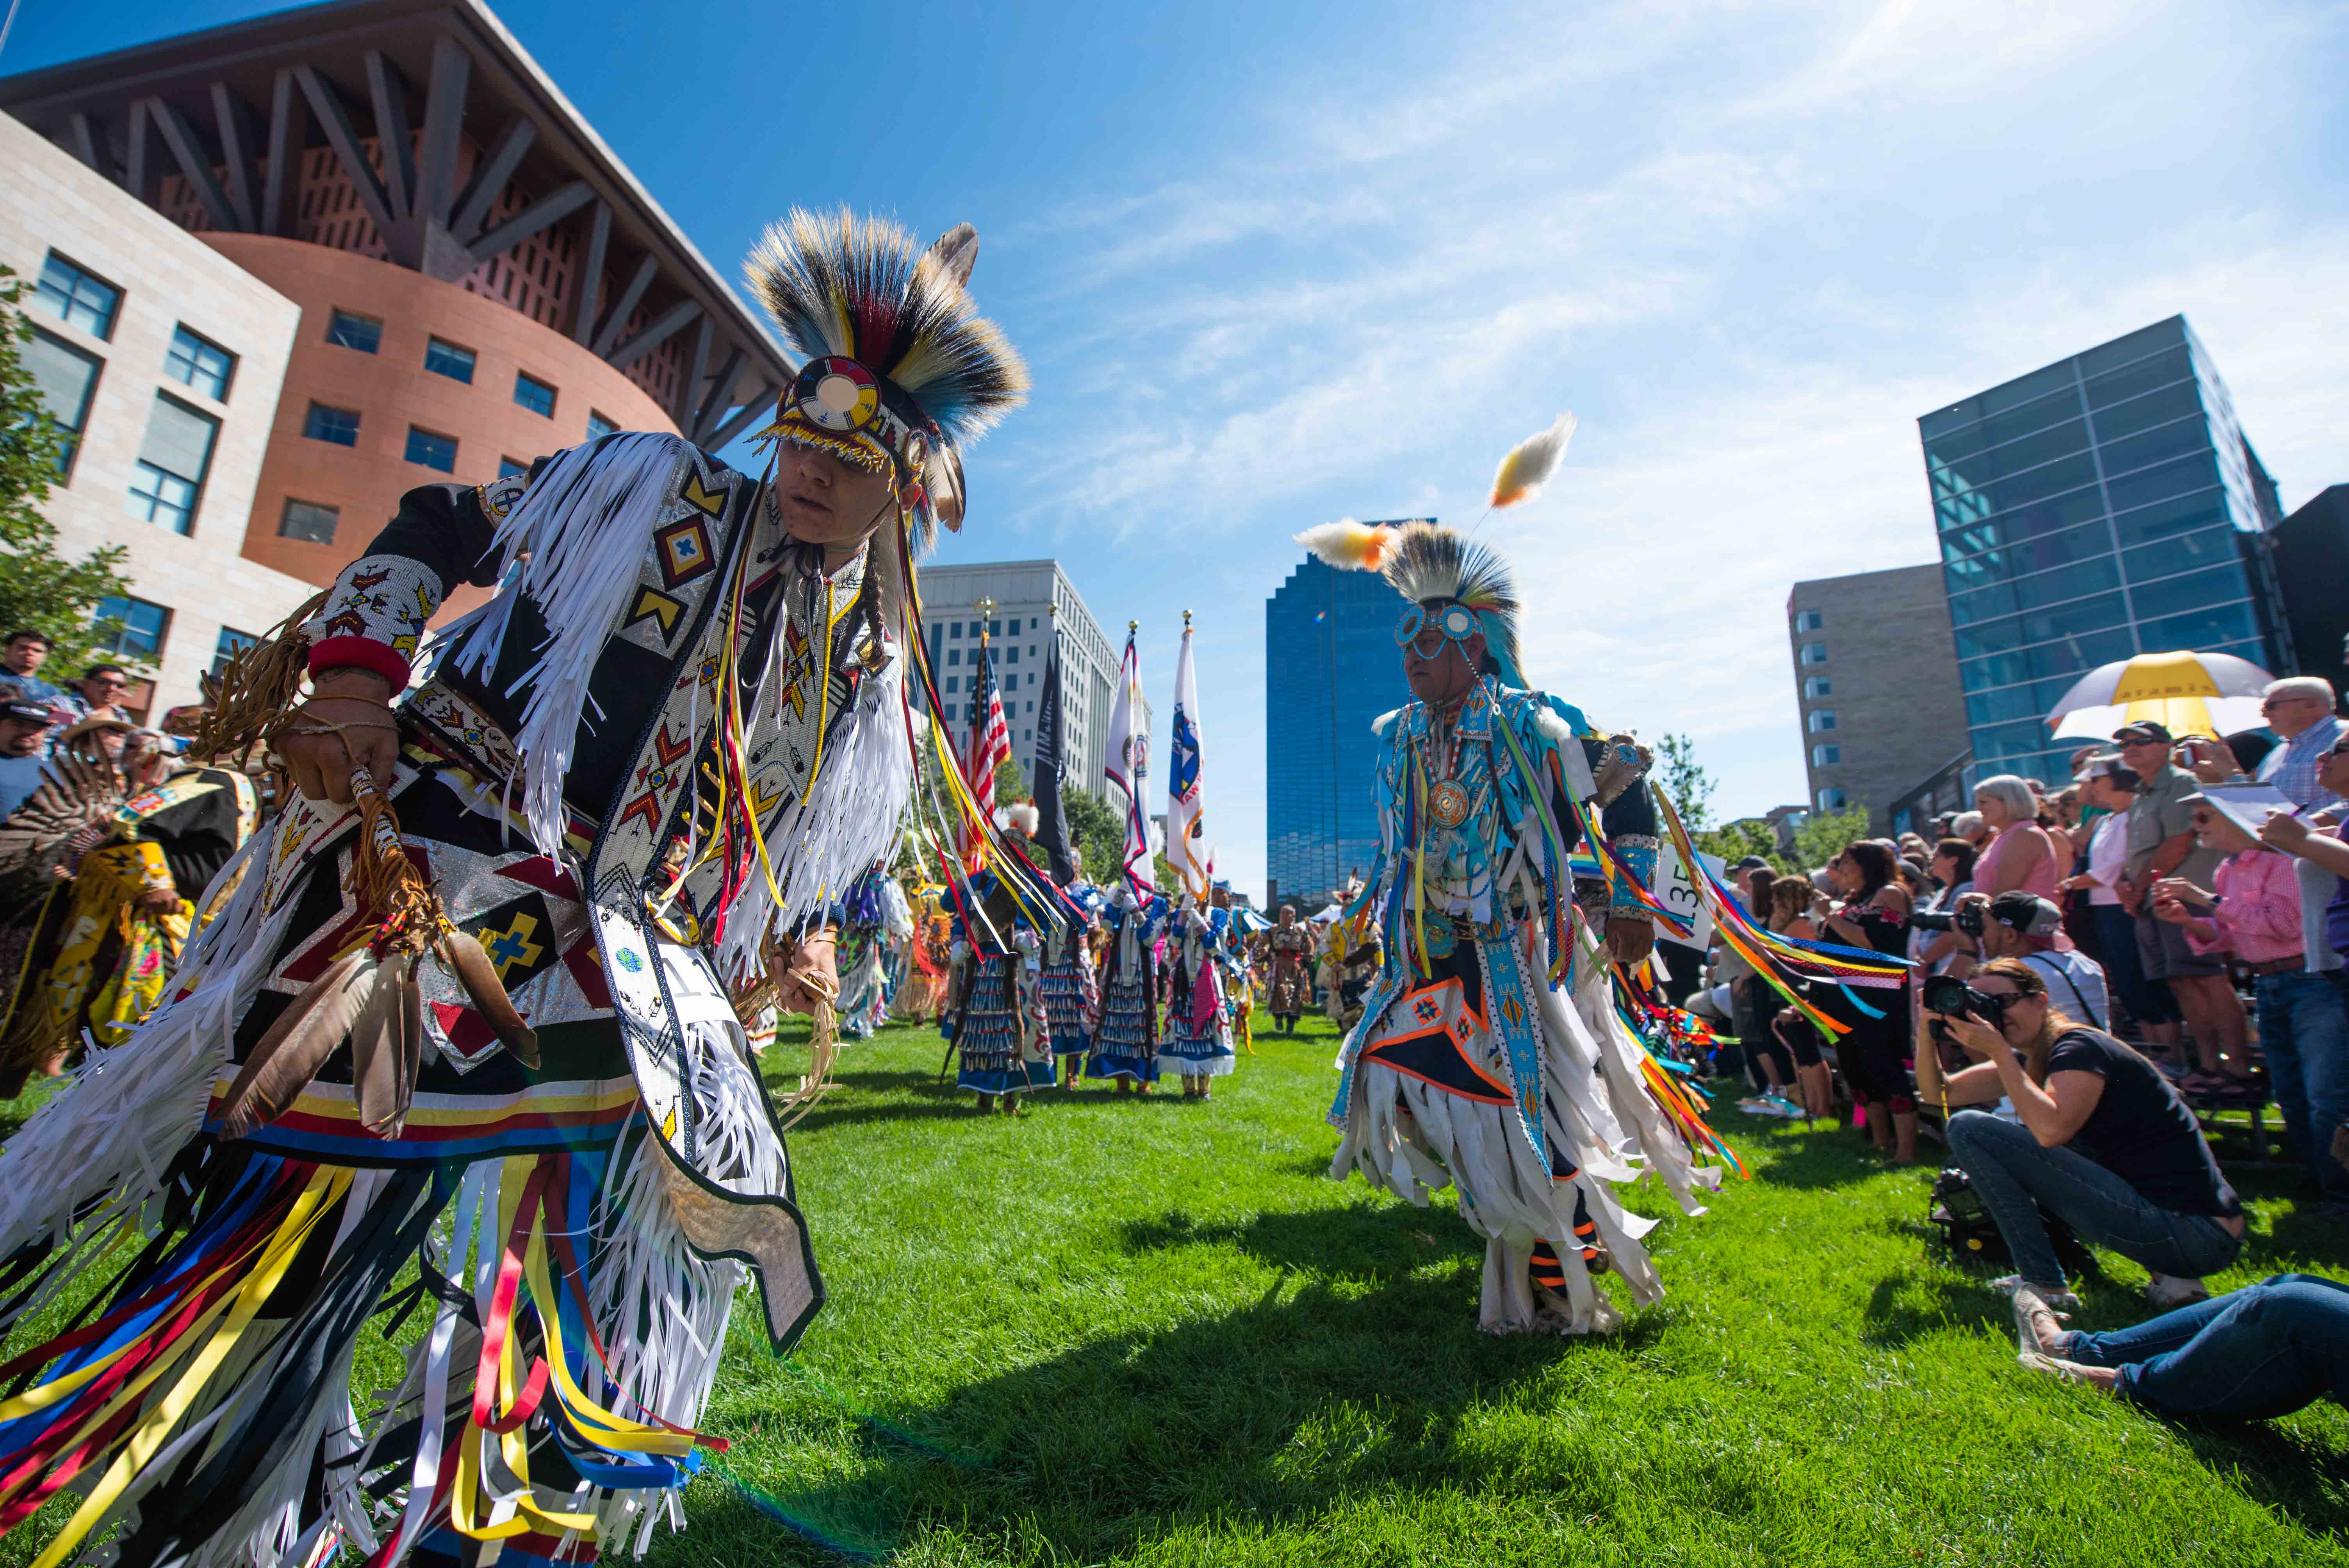 31st Annual Friendship Powwow Goes Virtual This Year